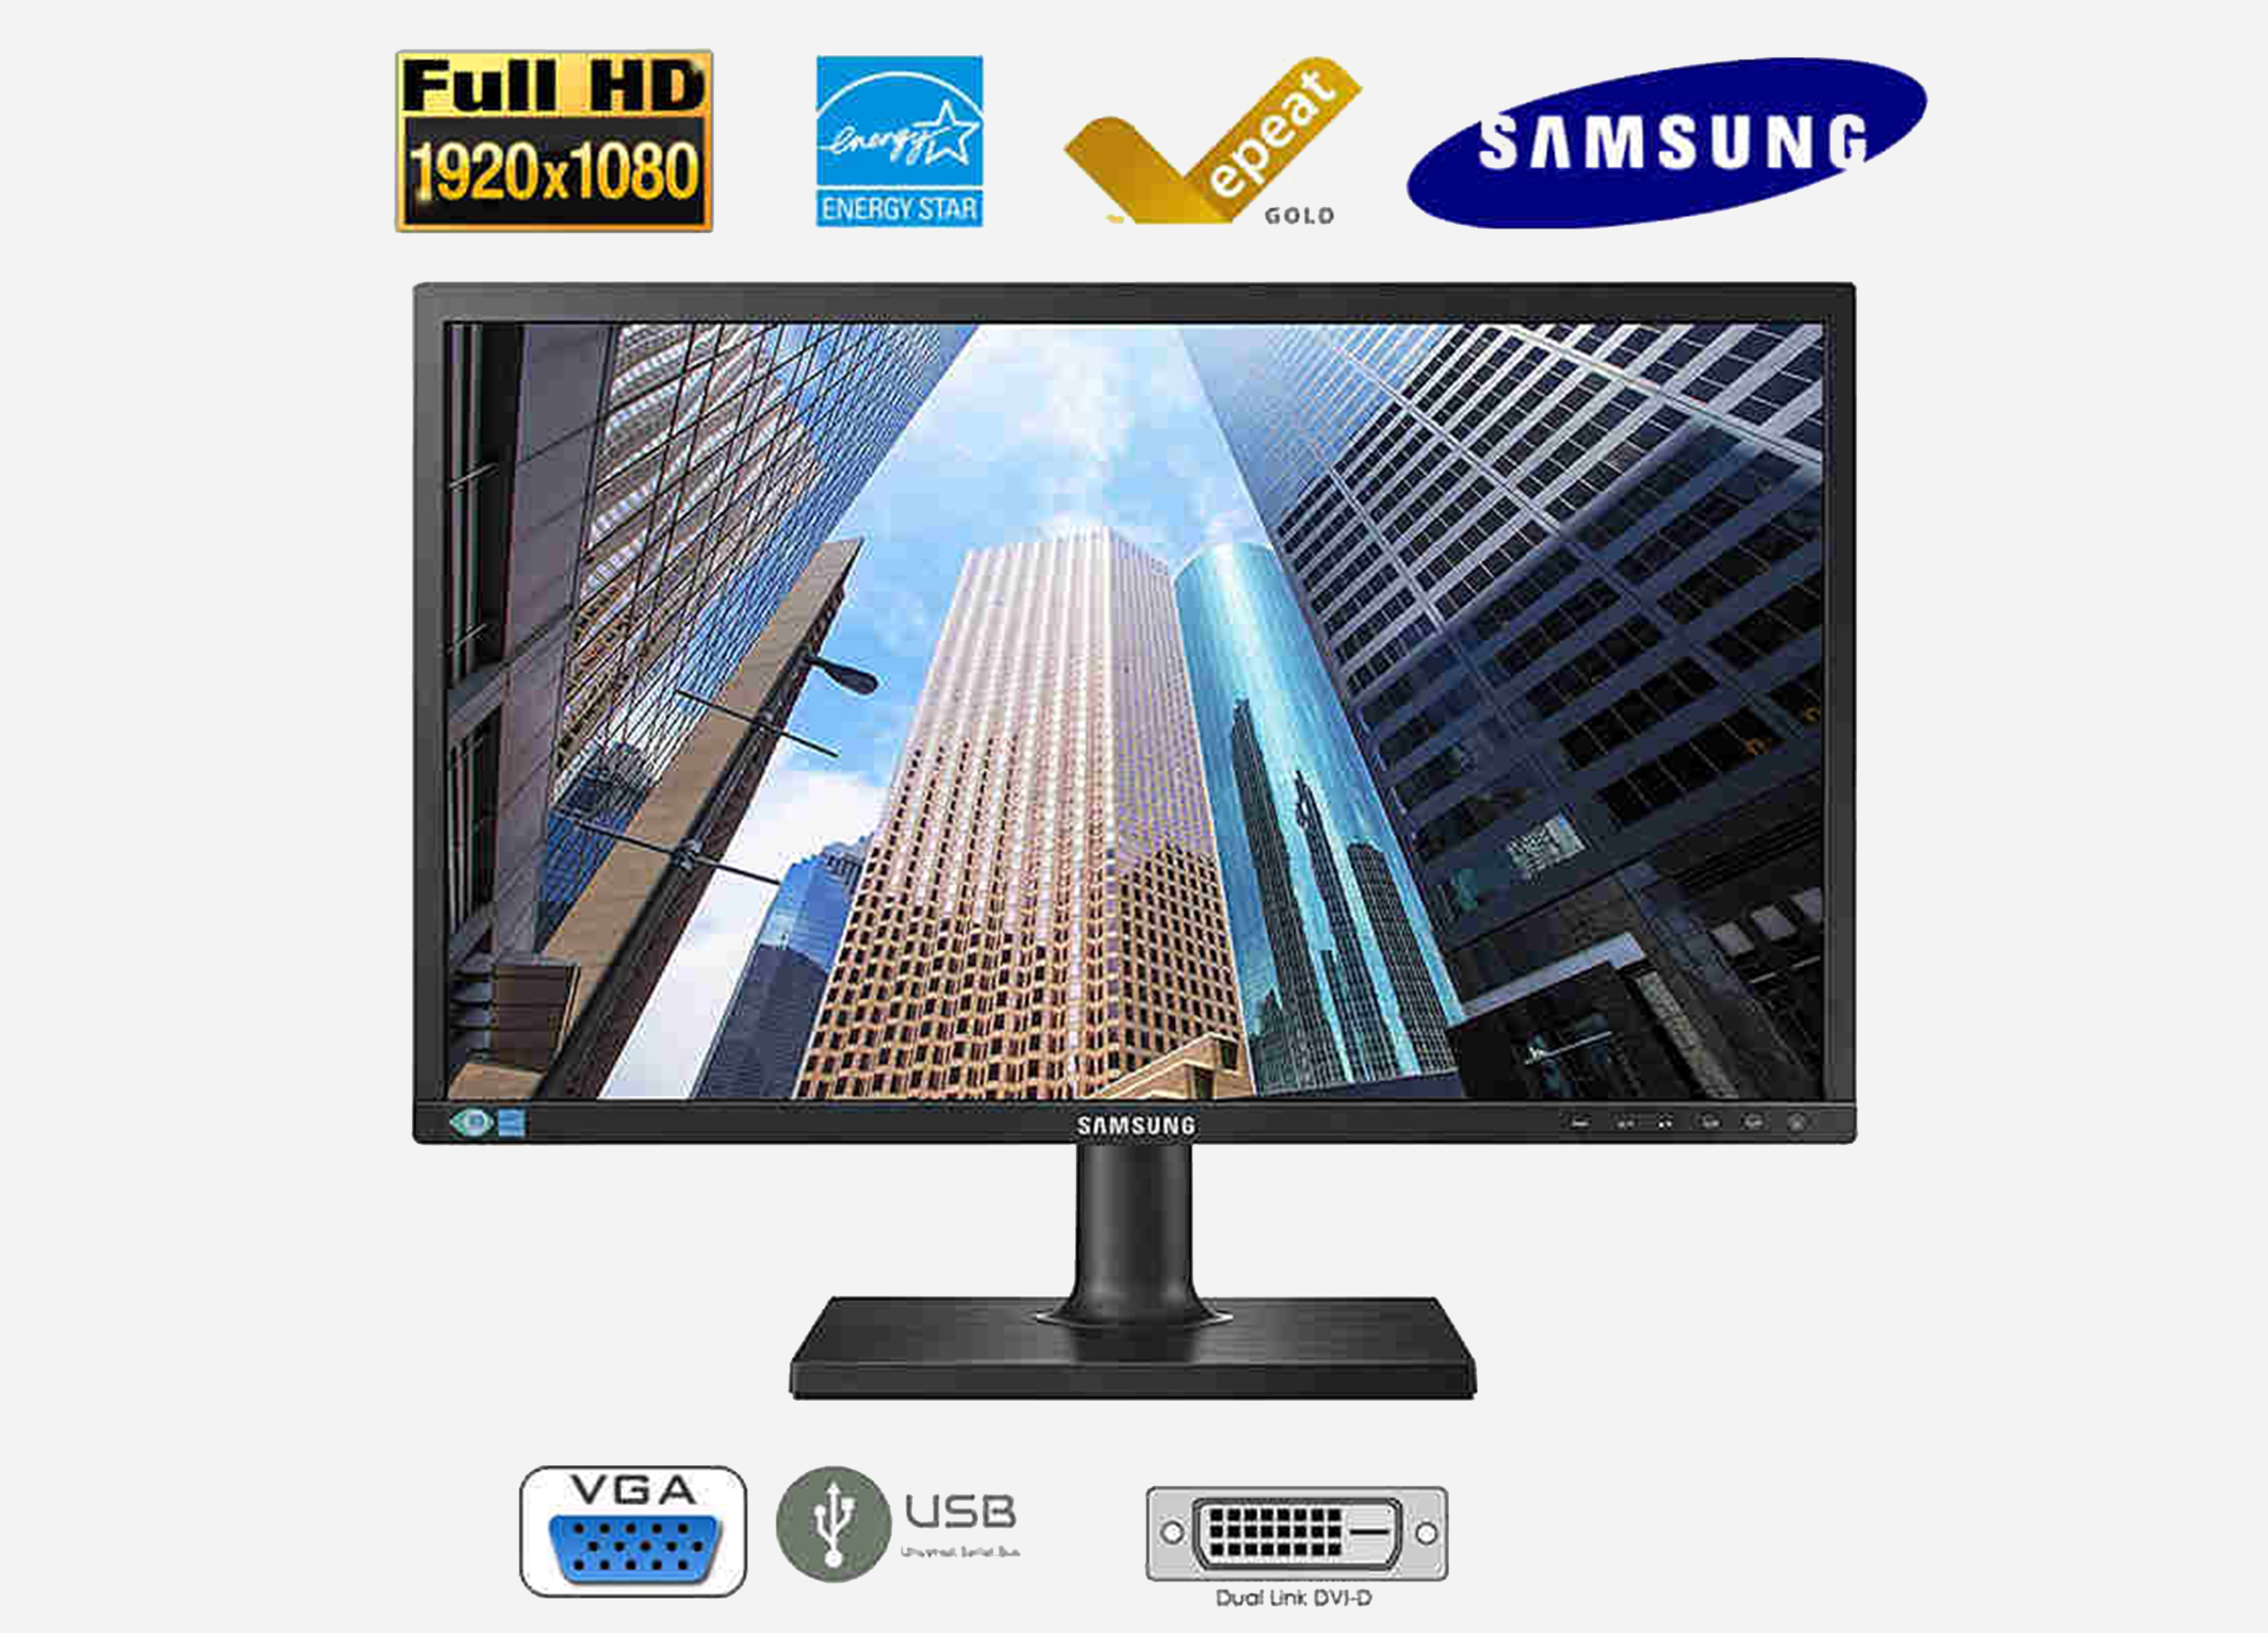 Samsung S24C650 Full HD LED